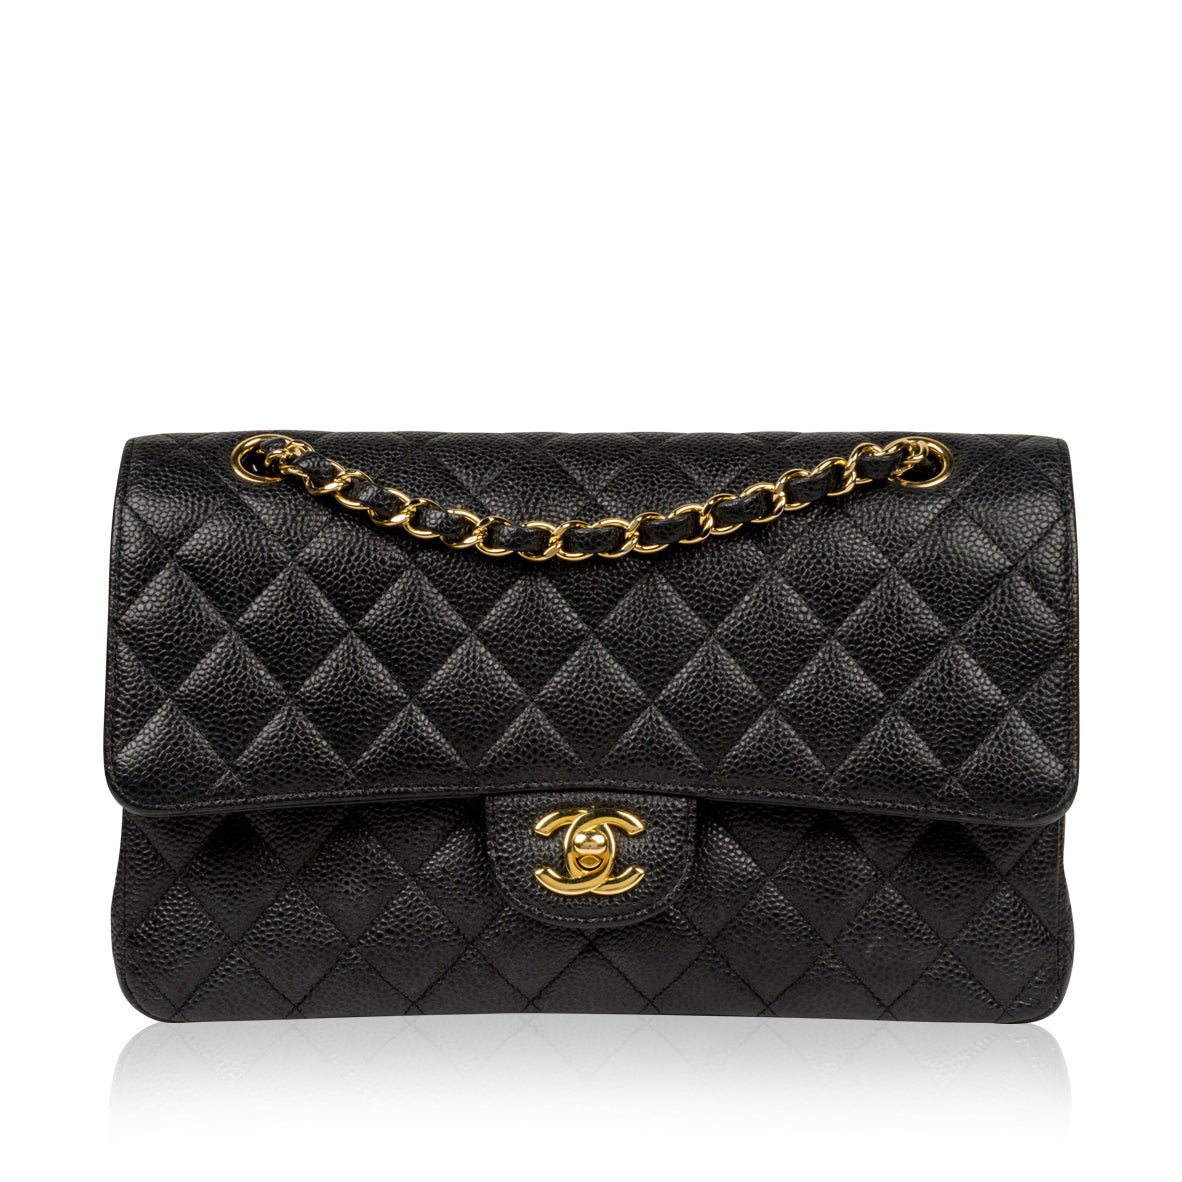 Chanel - Vintage Small Classic Flap Bag - Black Caviar GHW